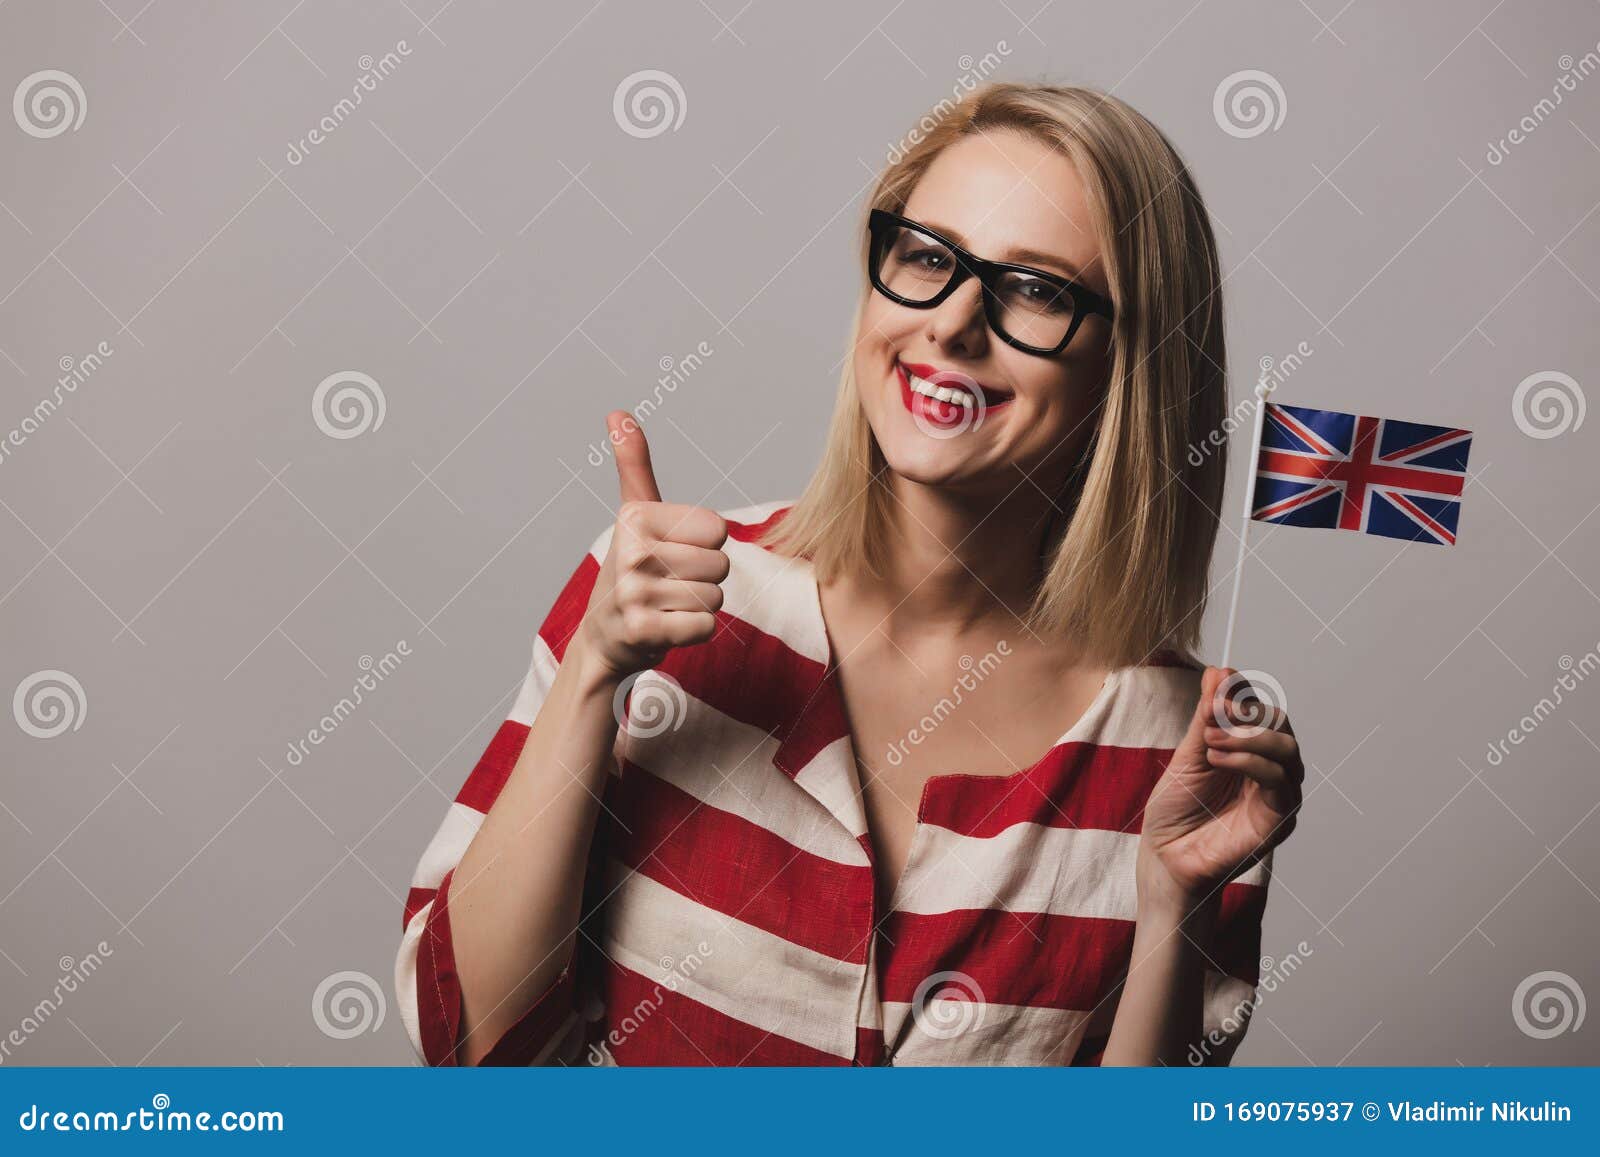 Girl Holds British Flag on Gray Background Stock Image - Image of ...